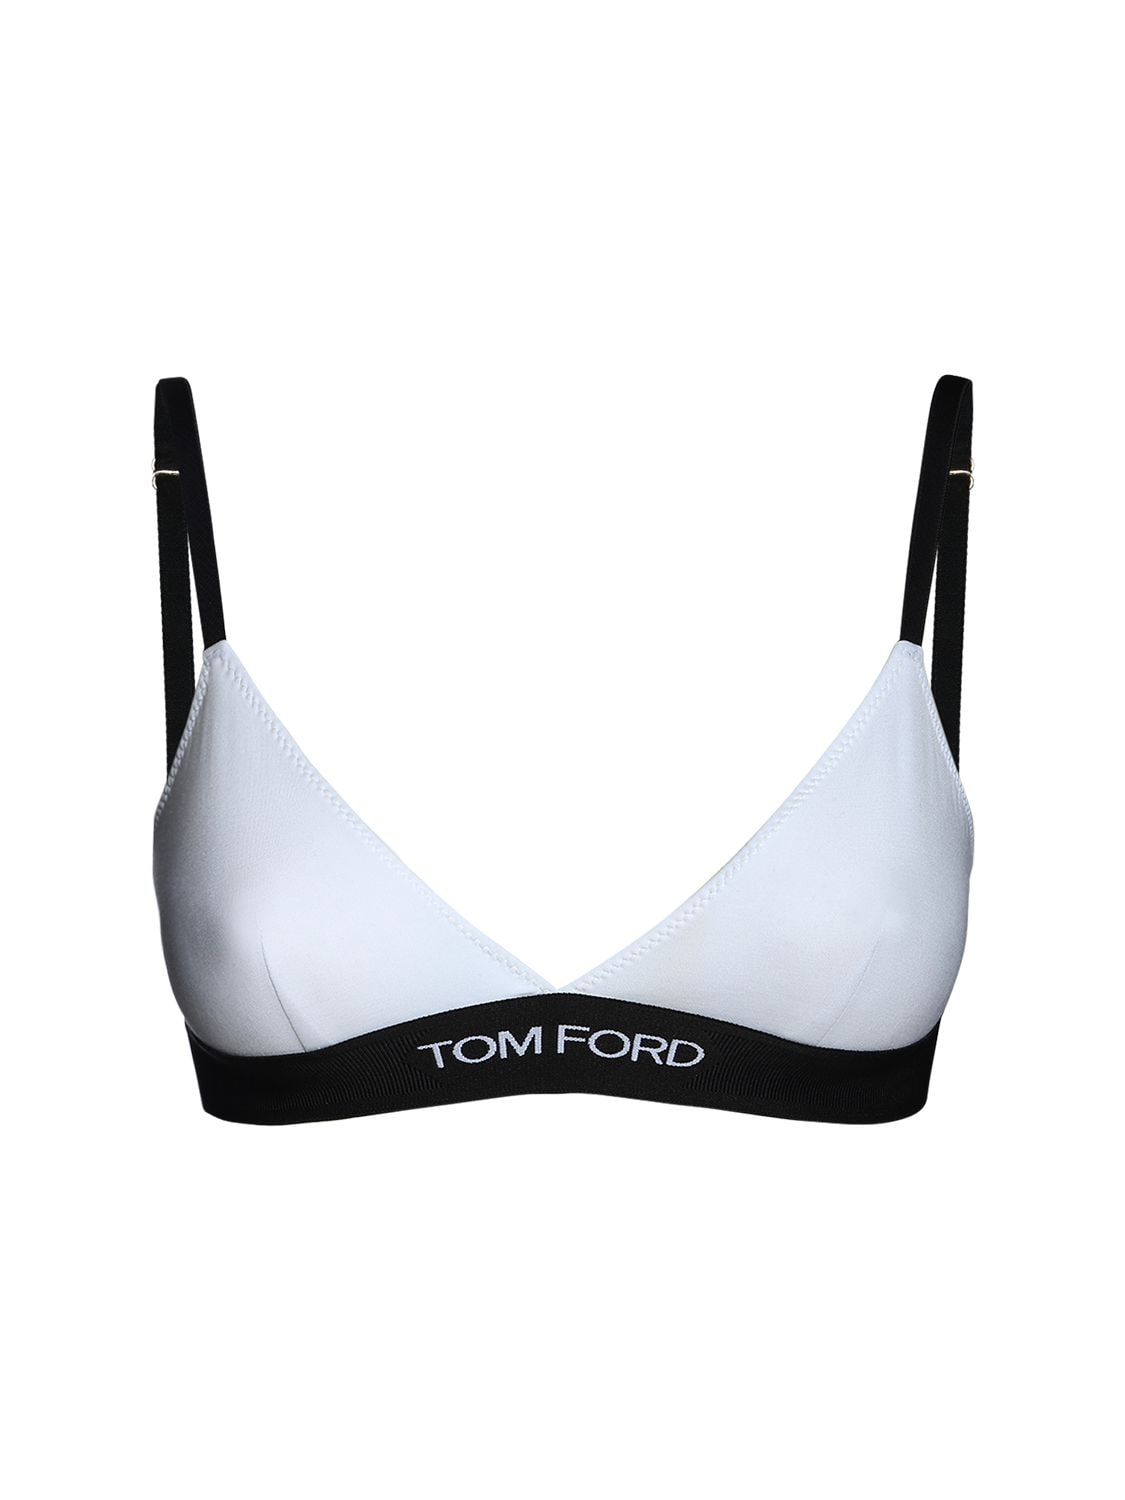 Tom Ford Signature Bra in White